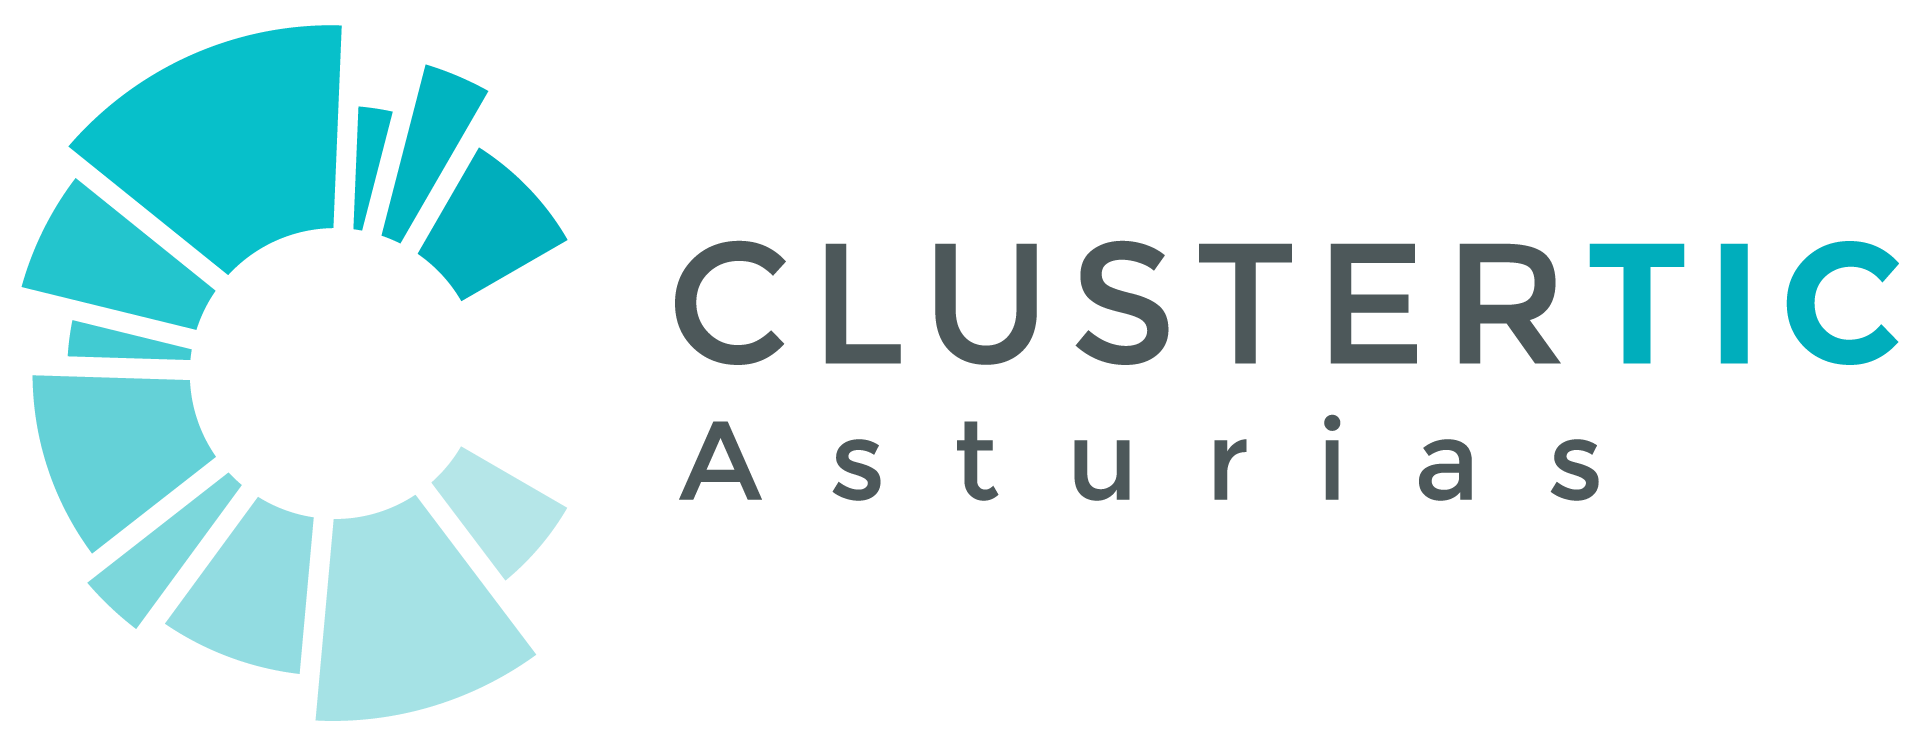 logo cluster tic asturias